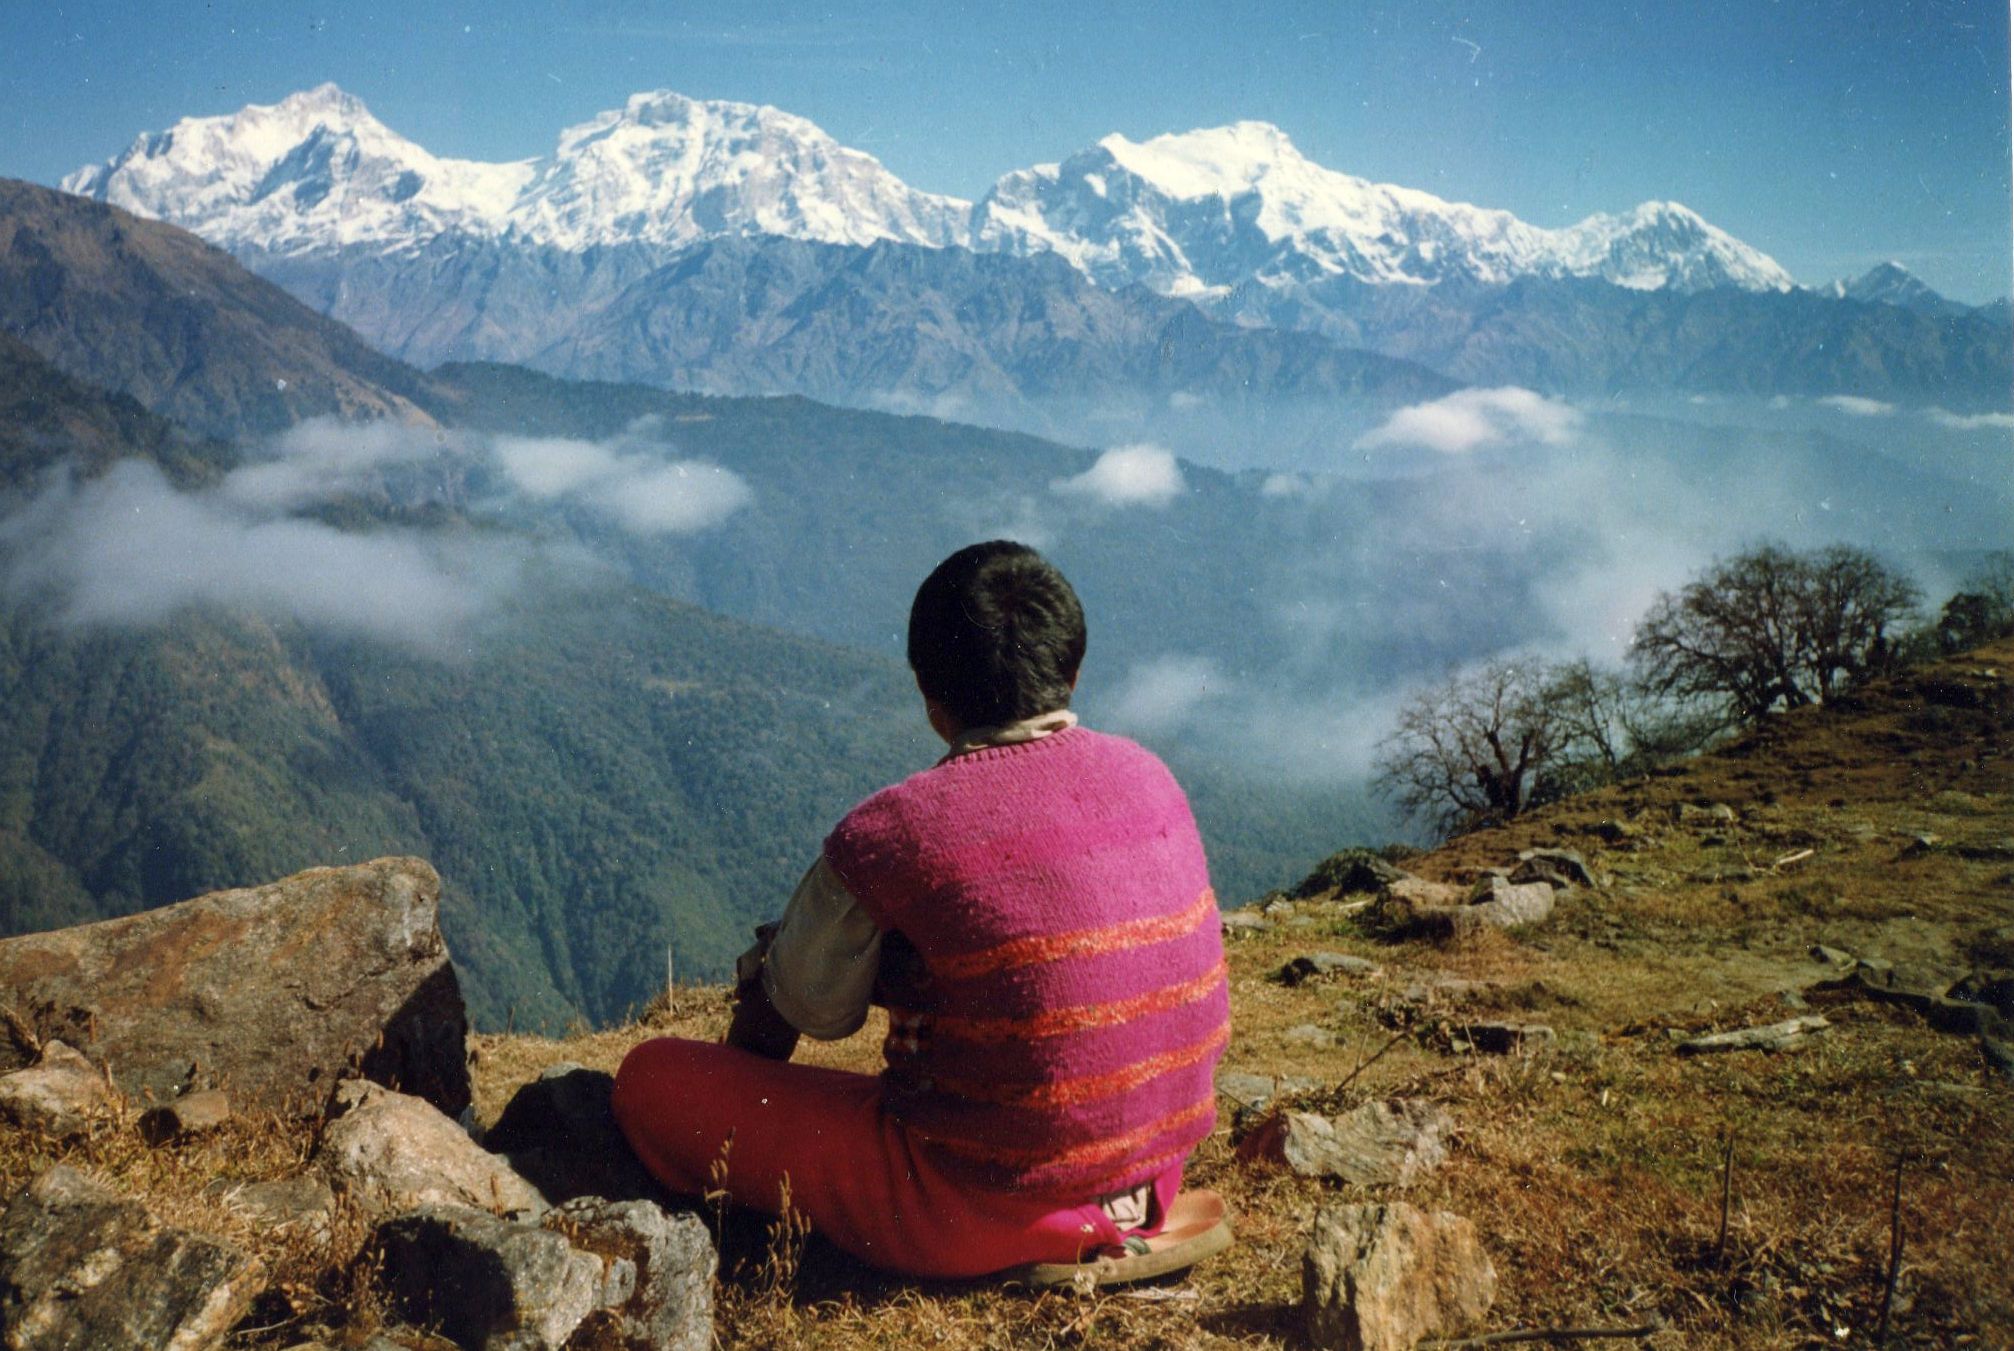 The Manaslu Himal - Mount Manaslu, Peak 29, Himalchuli and Baudha Peak